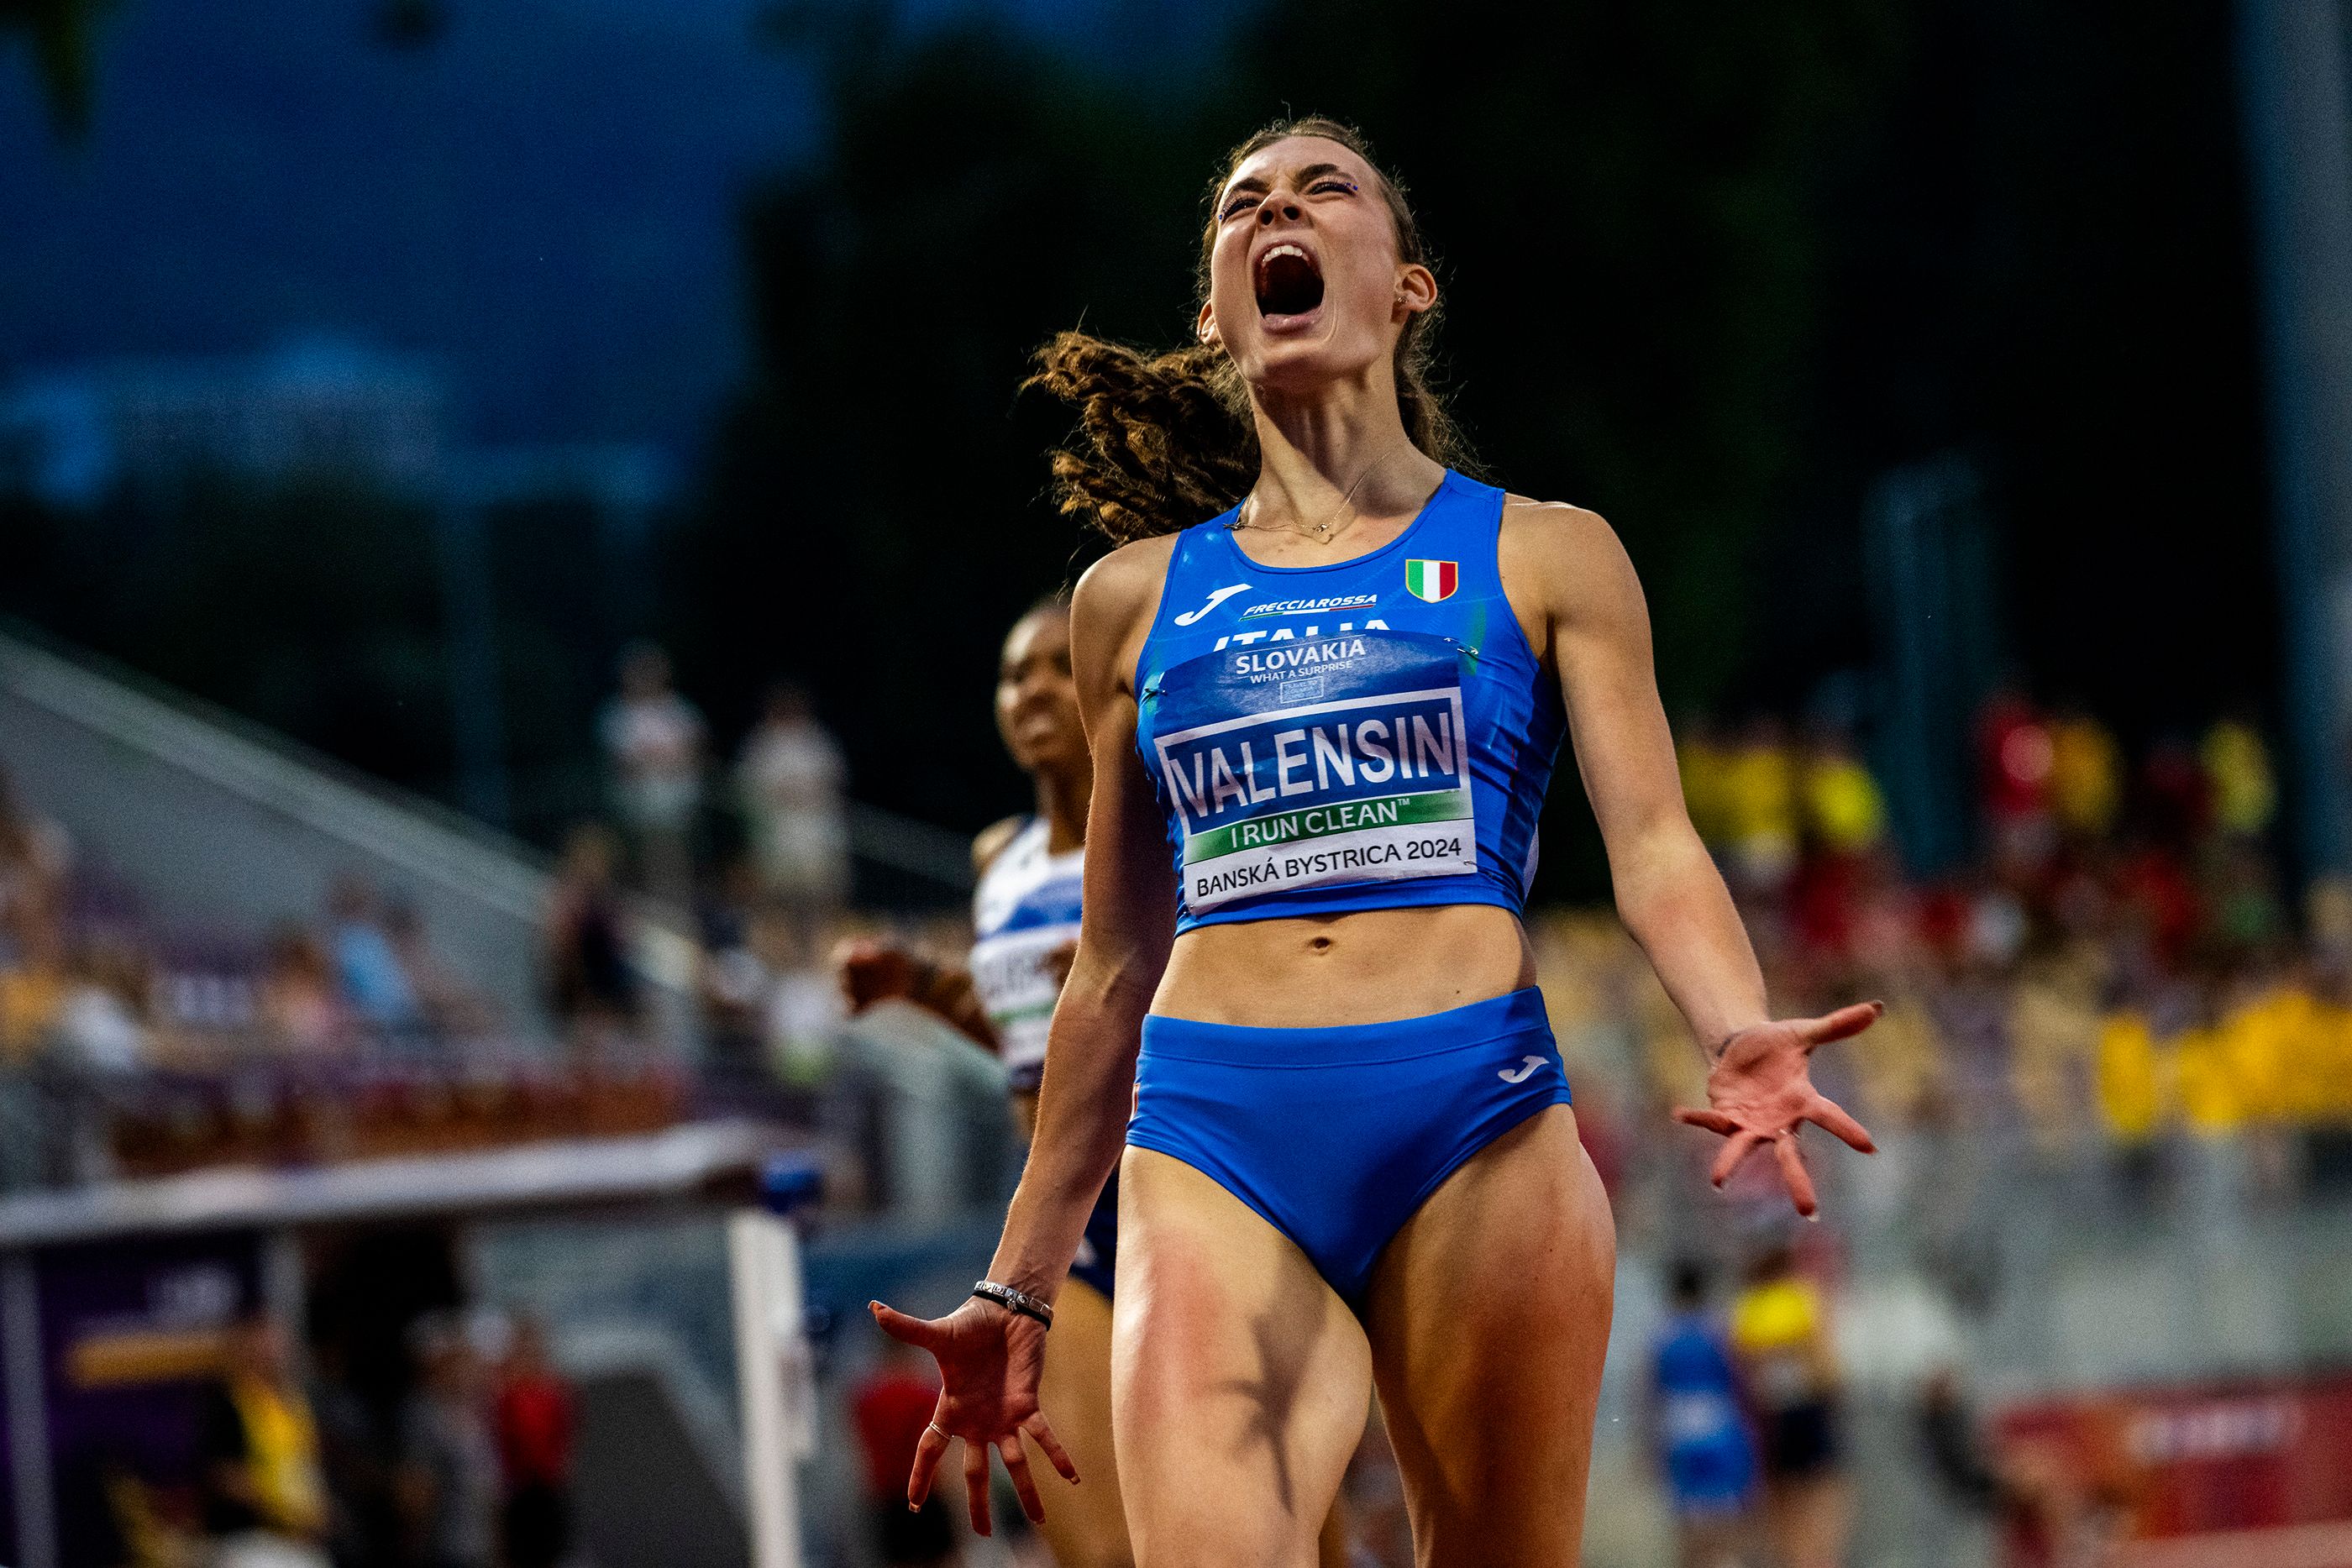 Elisa Valensin celebrates her 200m win at the European U18 Championships in Banska Bystrica